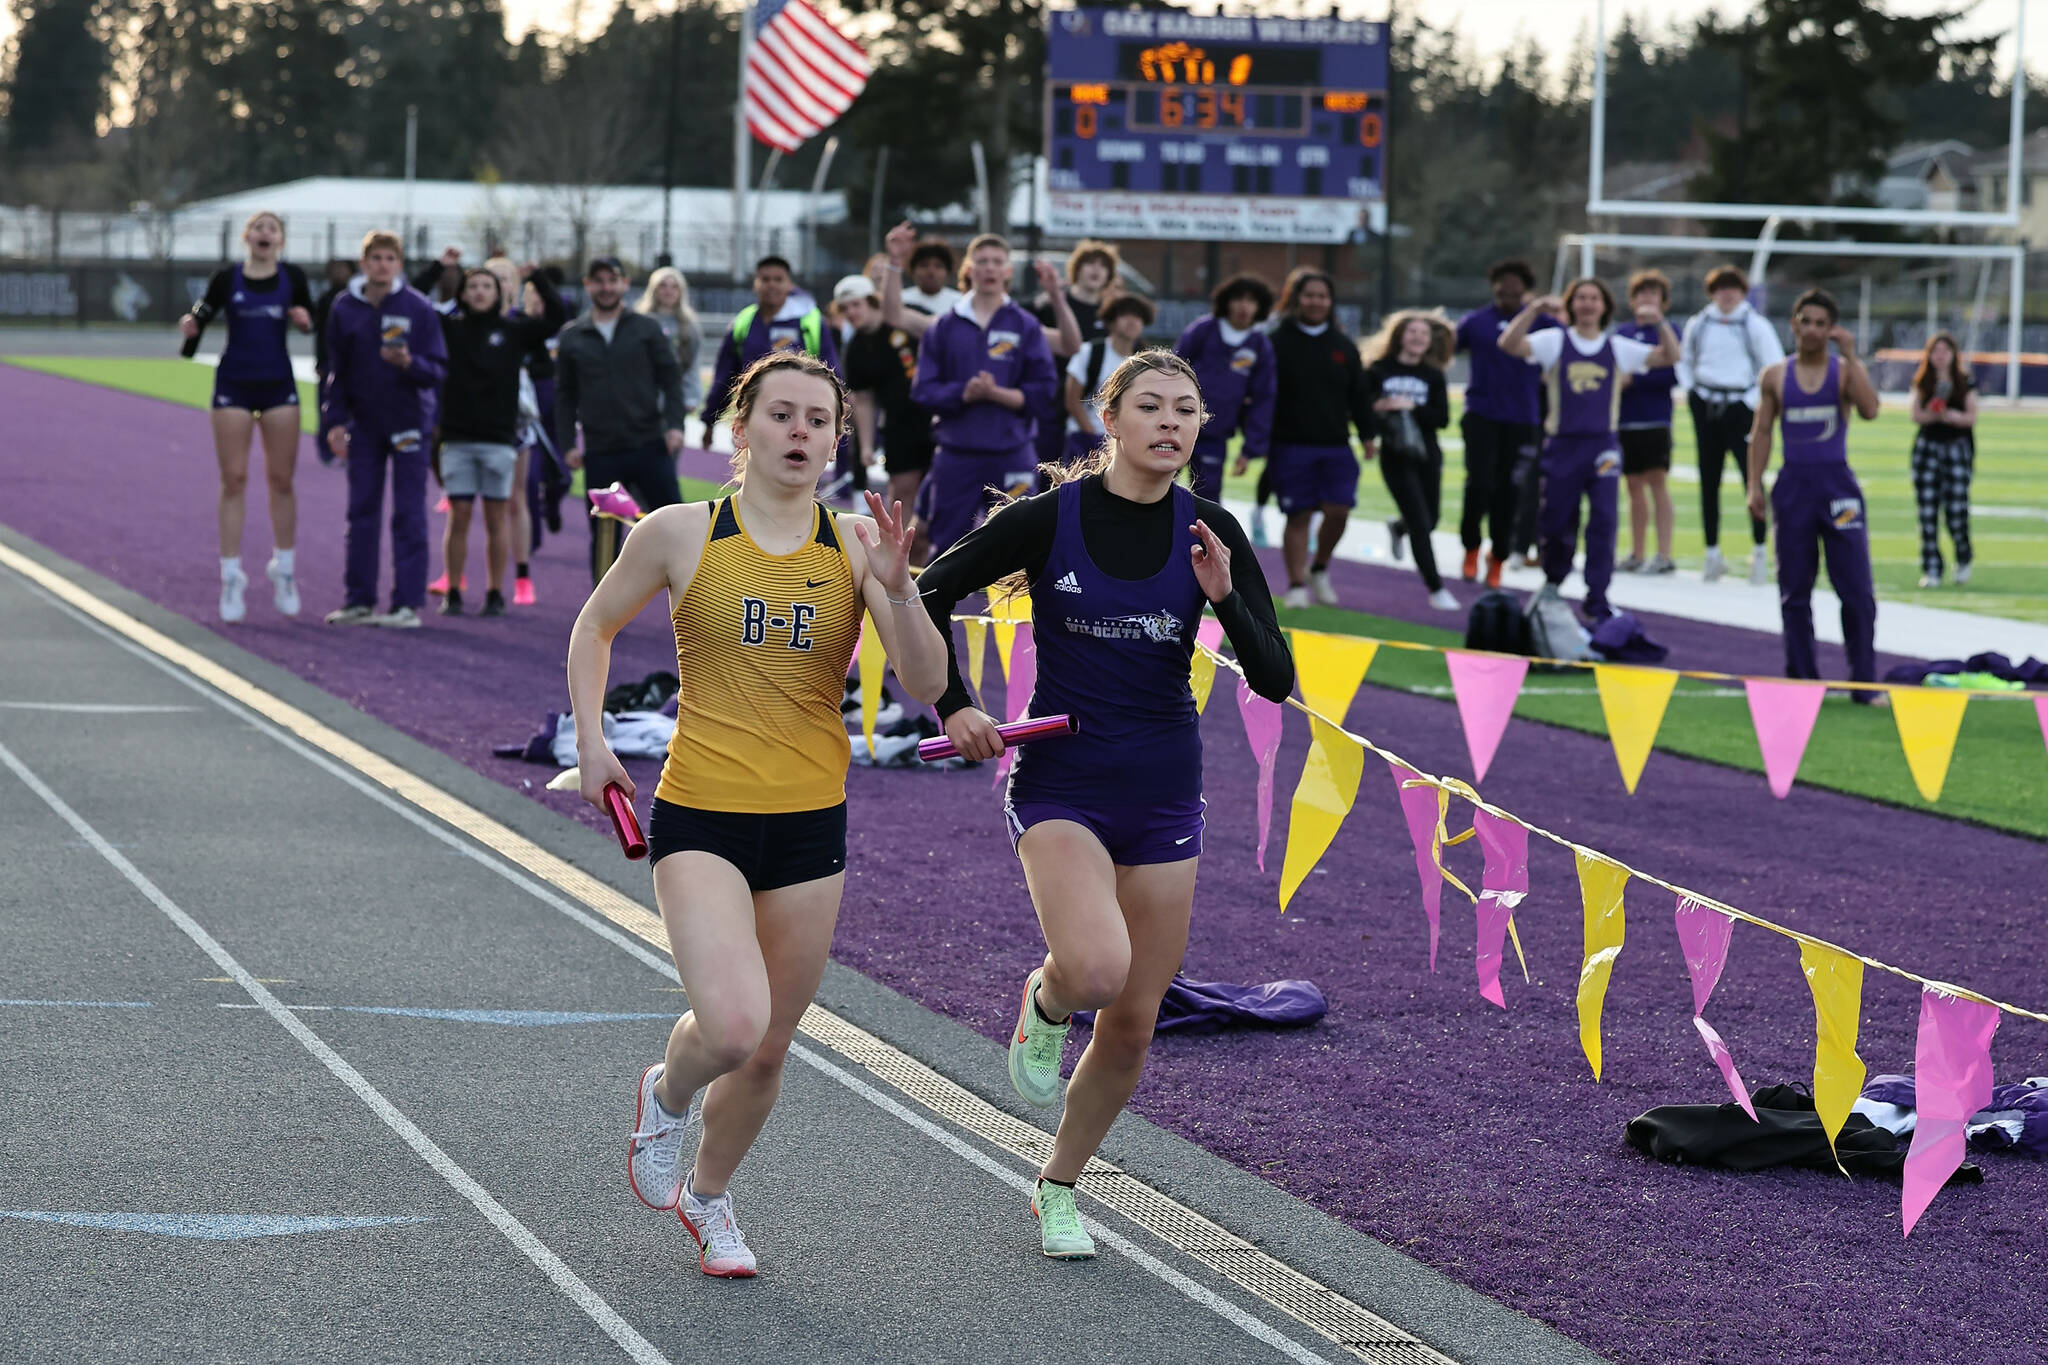 Audrey Hart (right) races a Burlington athlete. The Oak Harbor High School varsity girls team defeated Burlington 96.83 to 53.16. (Photo by John Fisken)